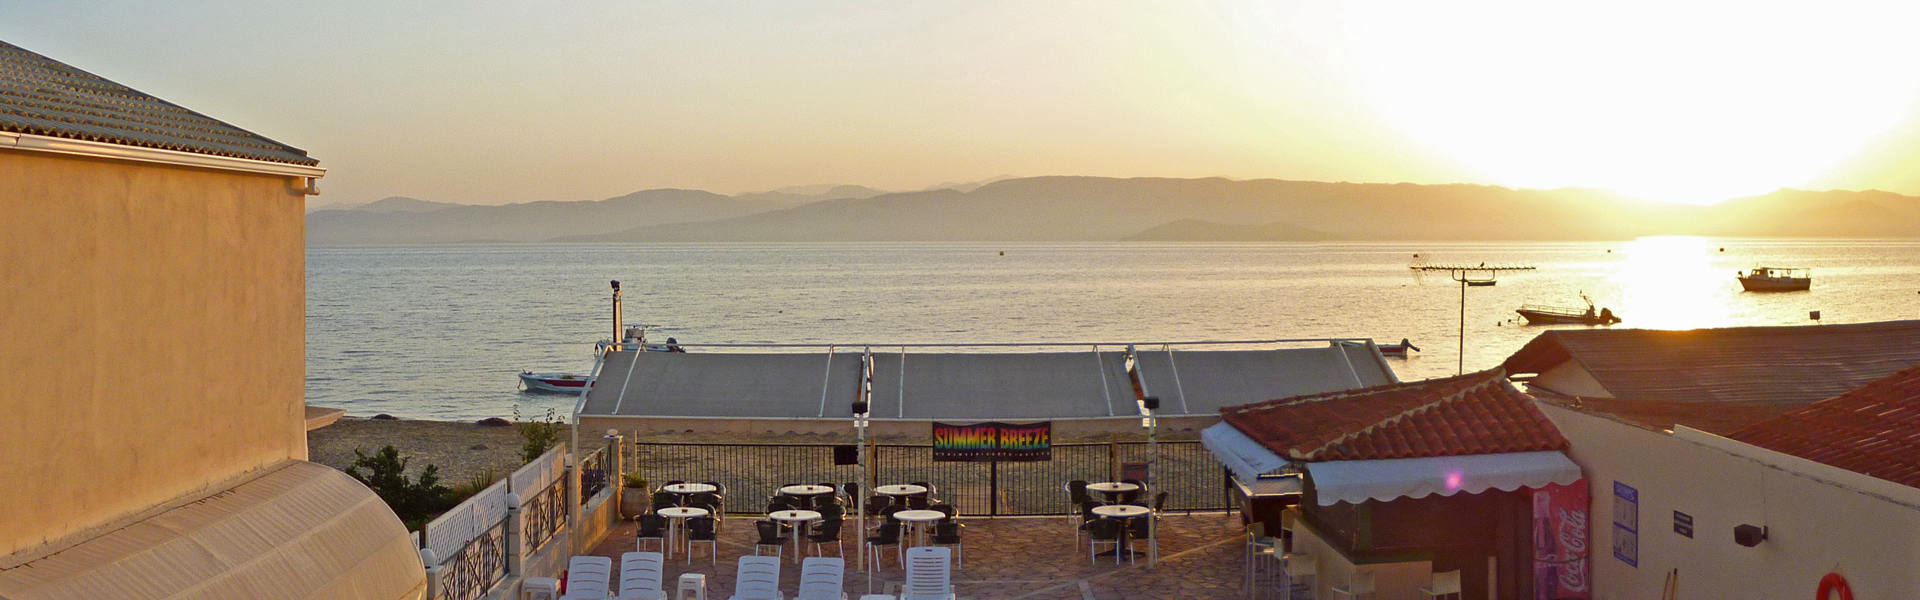 Stavros Beach Hotel - Kavos sunrise view